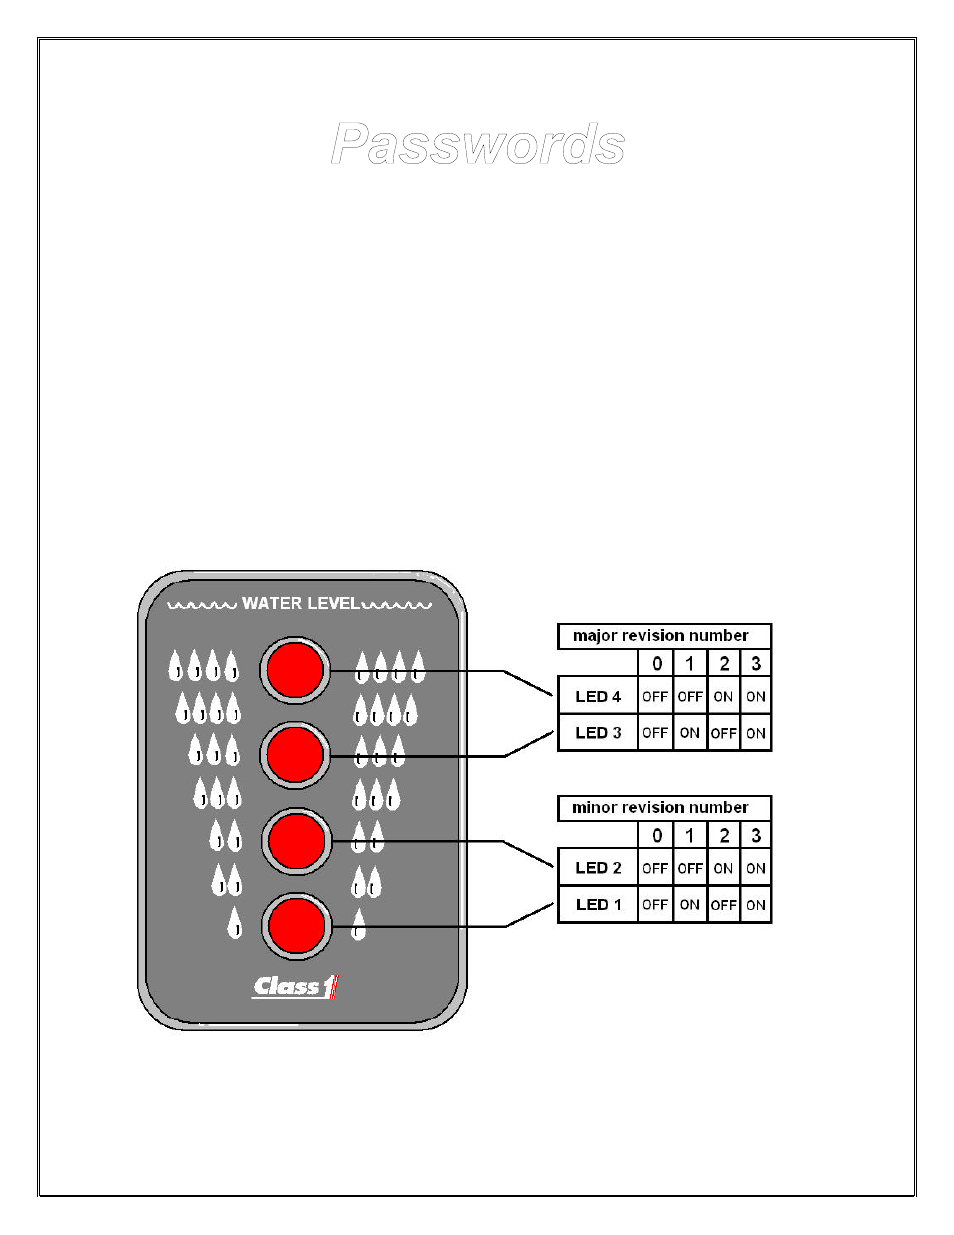 Passwords | Class1 Intelli-Tank User Manual | Page 12 / 15